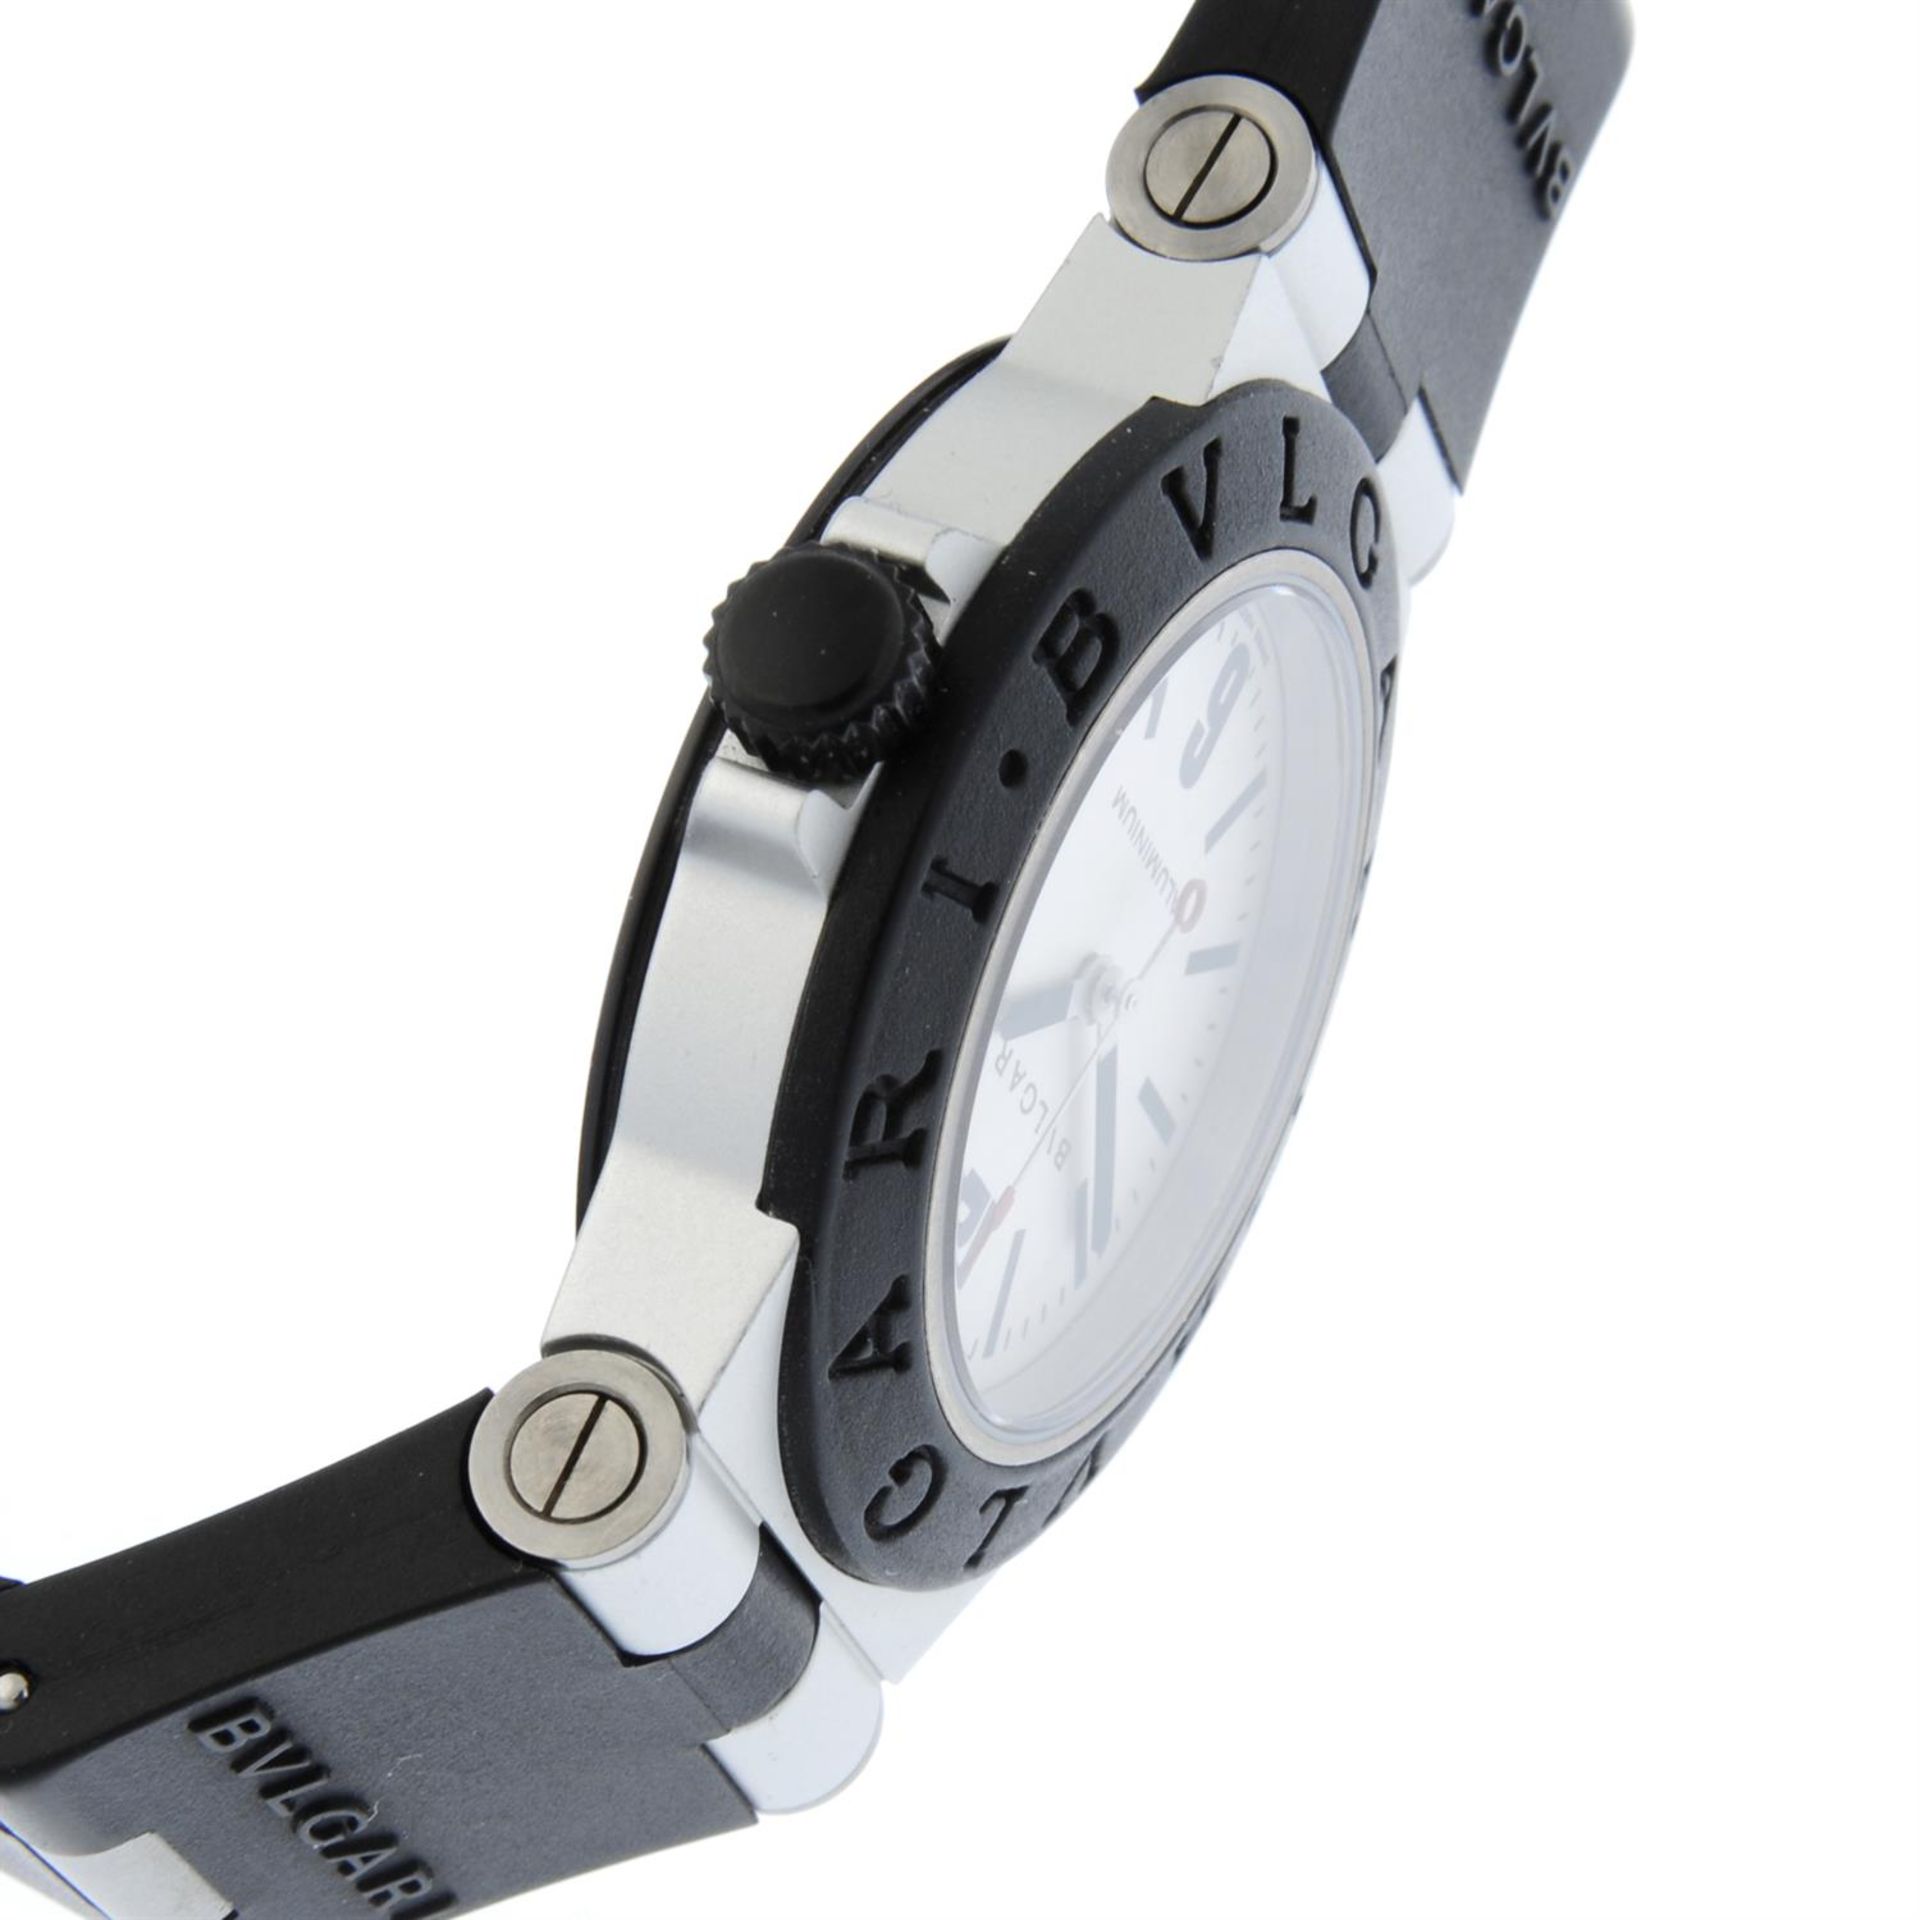 BULGARI - a bi-material Aluminium Diagono wrist watch, 32mm. - Image 3 of 6